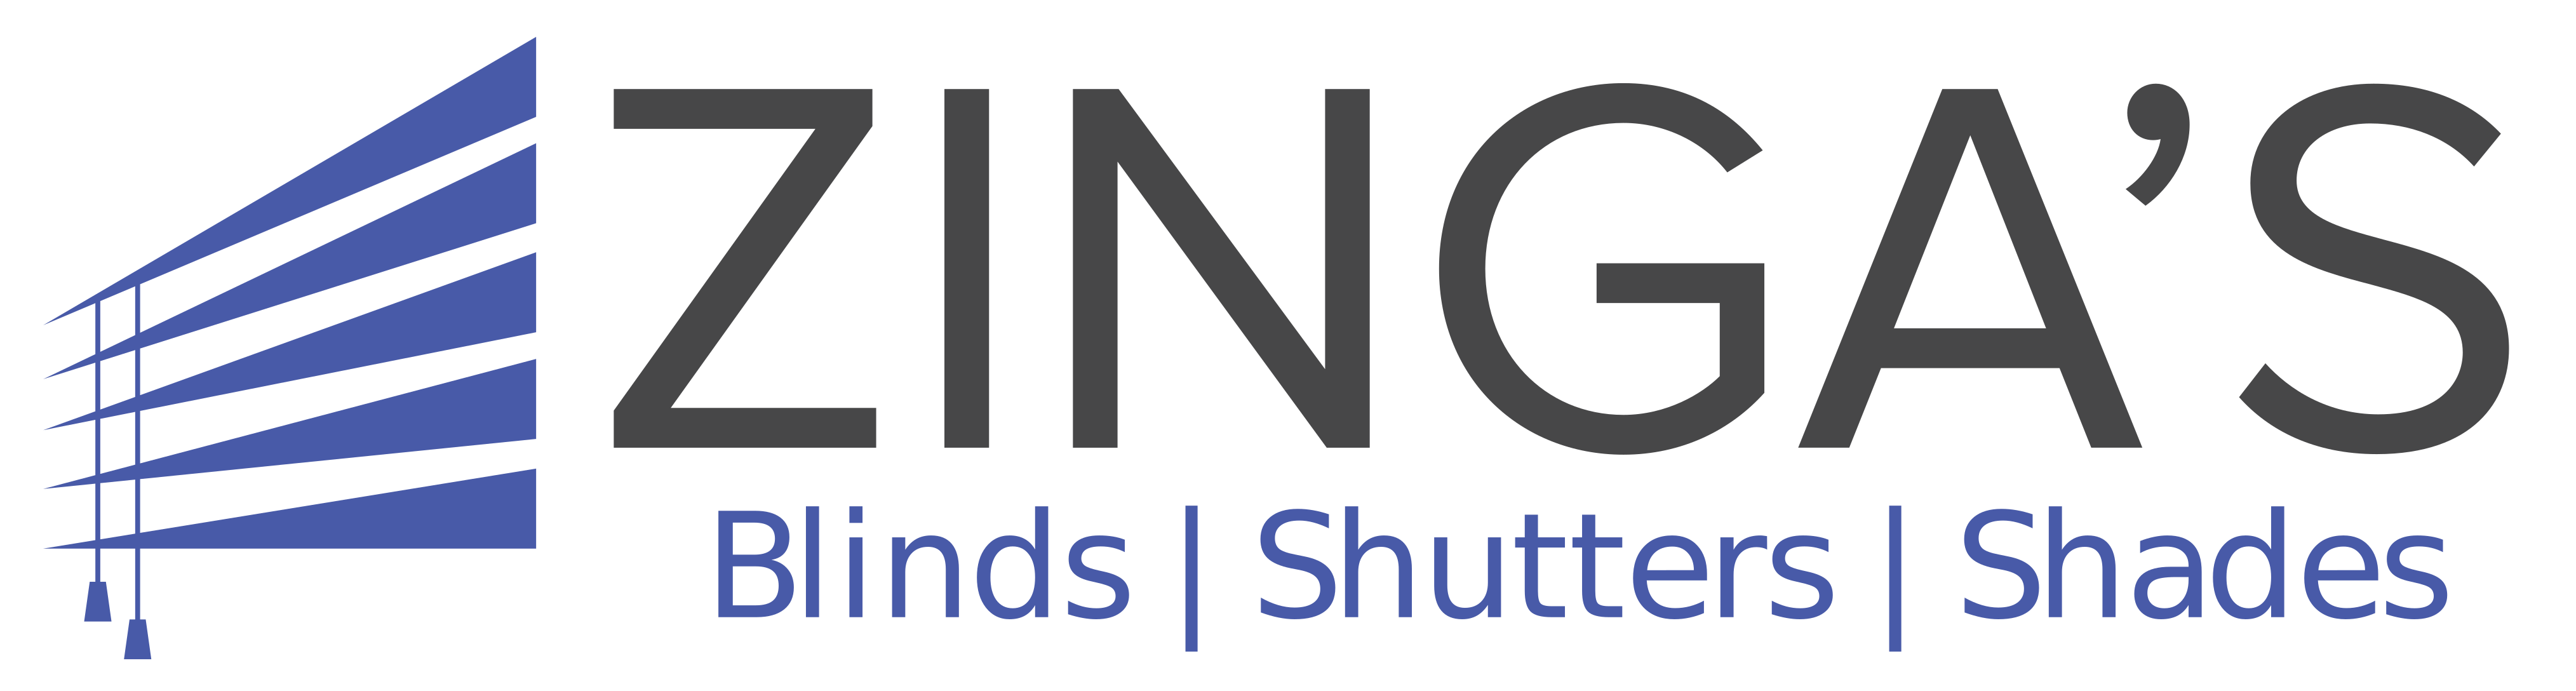 Zinga's - Blinds, Shutters, Shades Logo